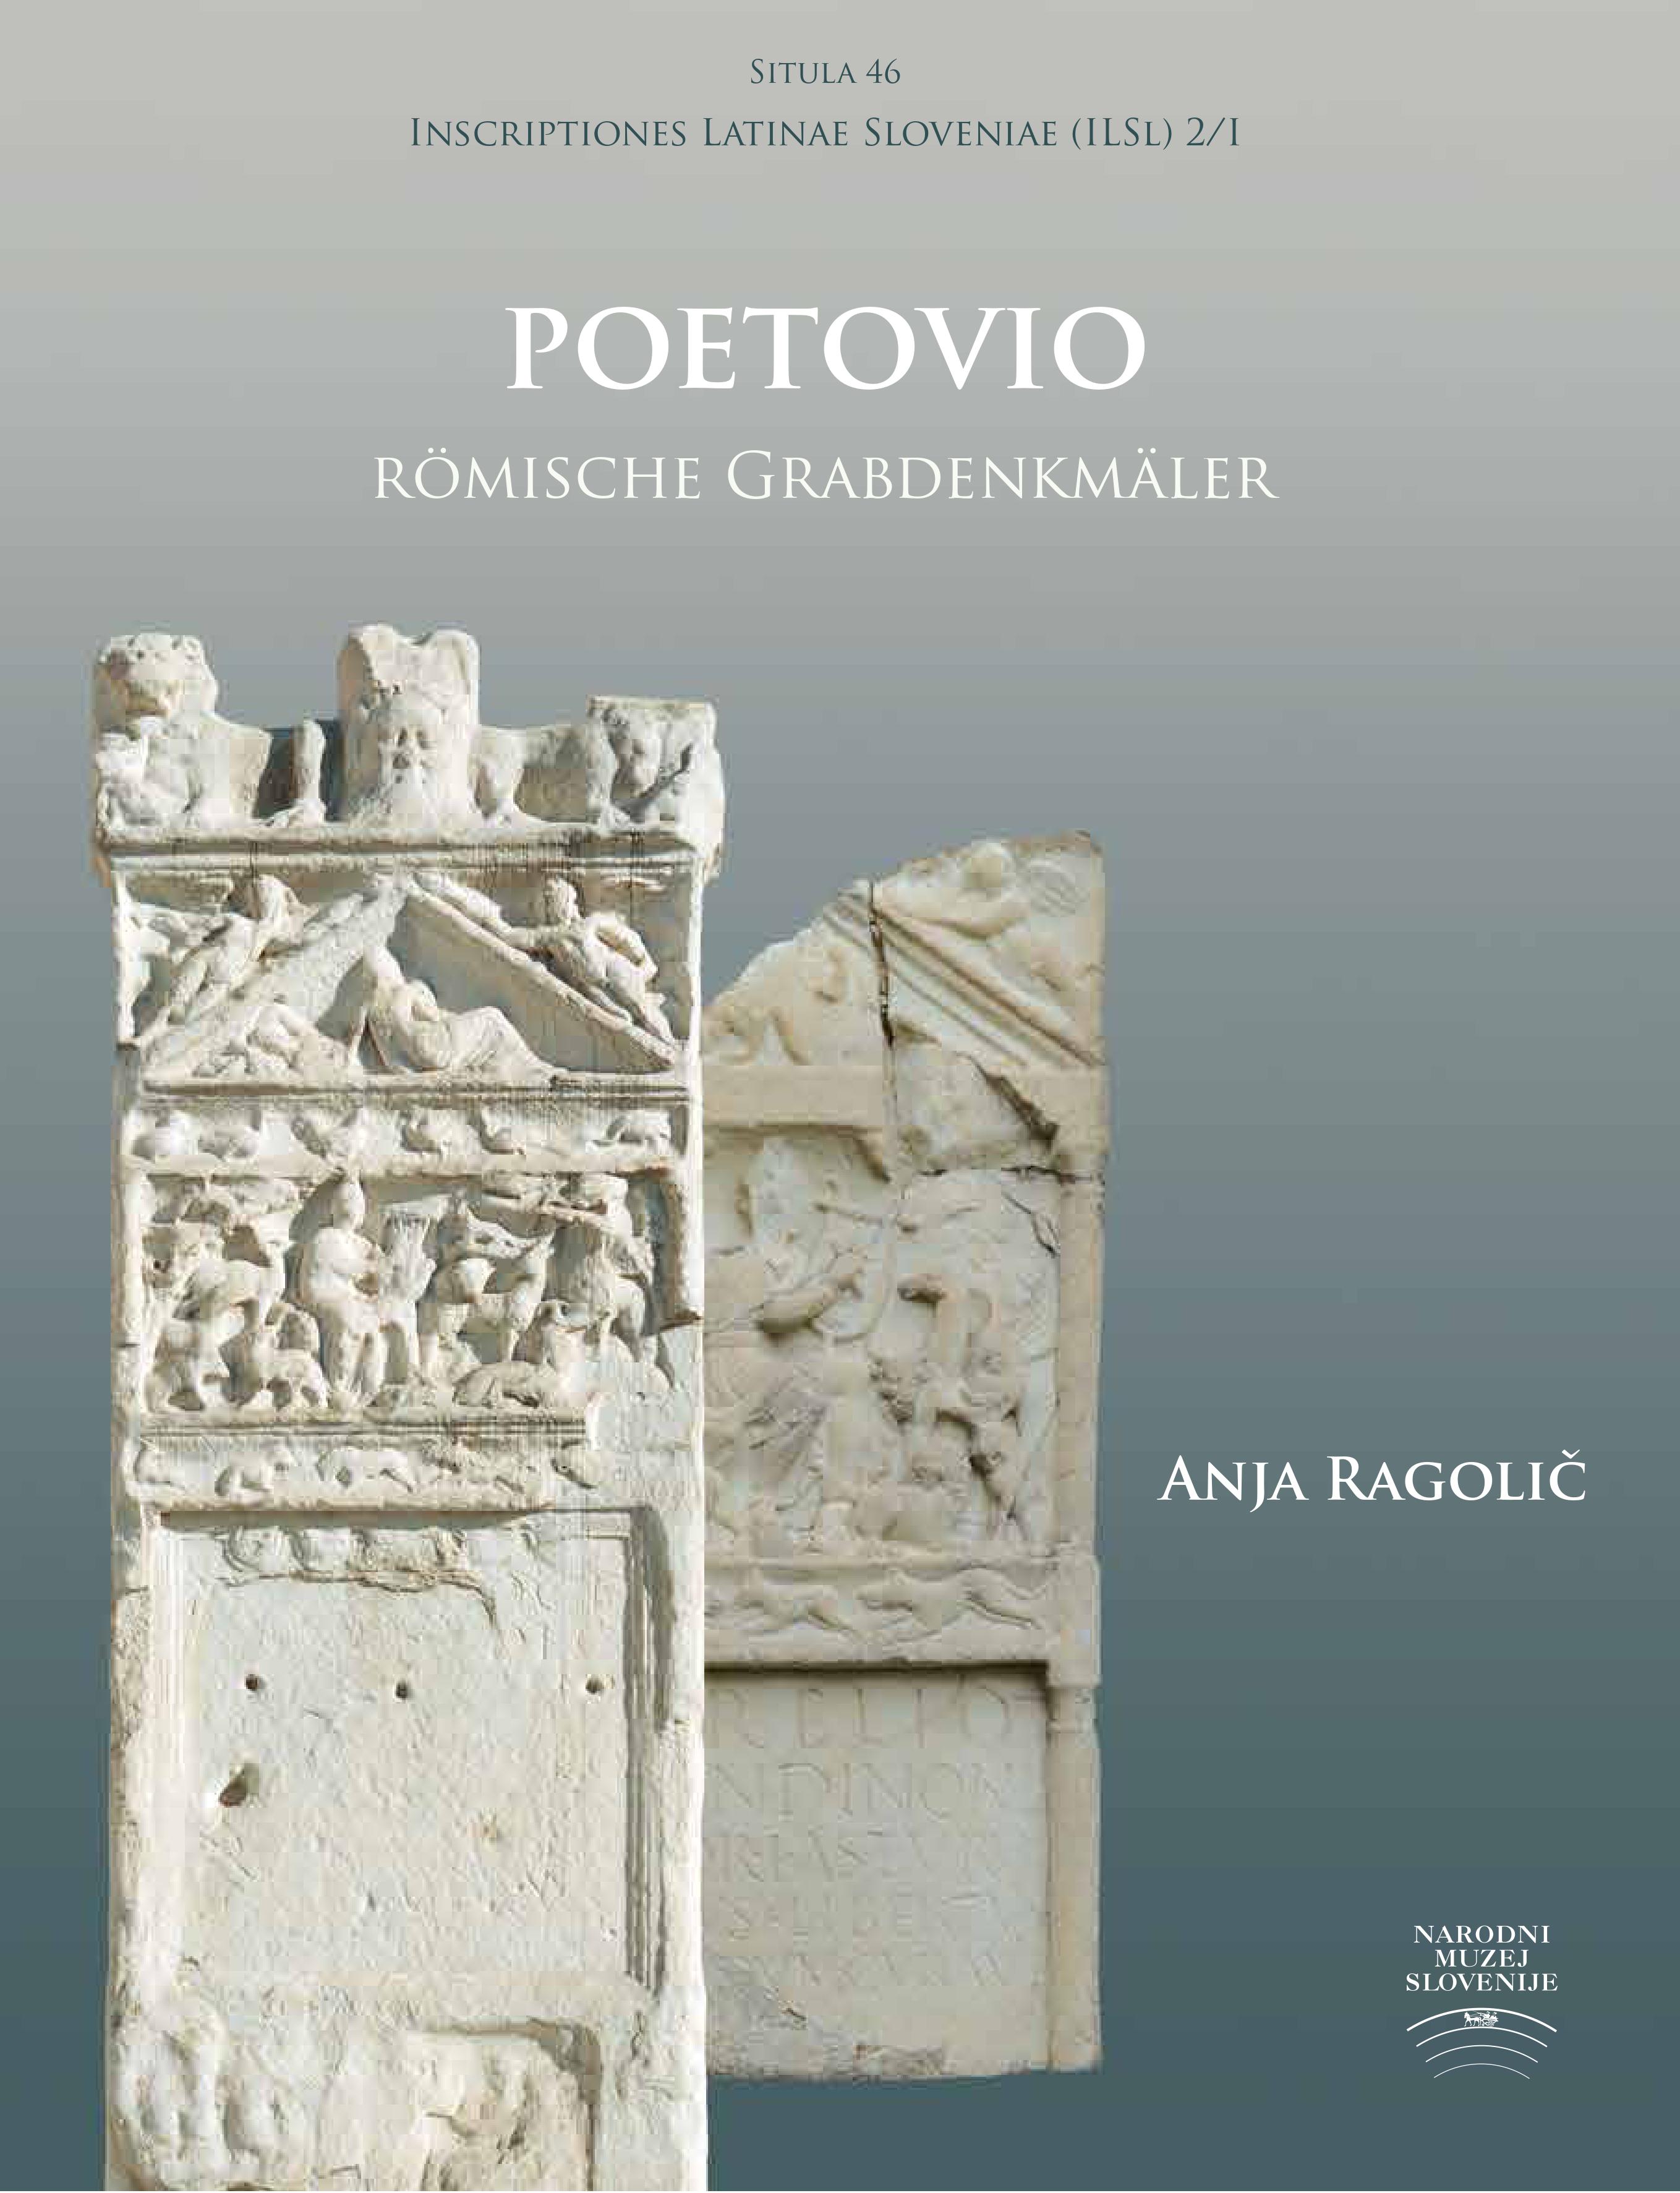 Ragolič, Anja : Poetovio. Römische Grabdenkmäler 